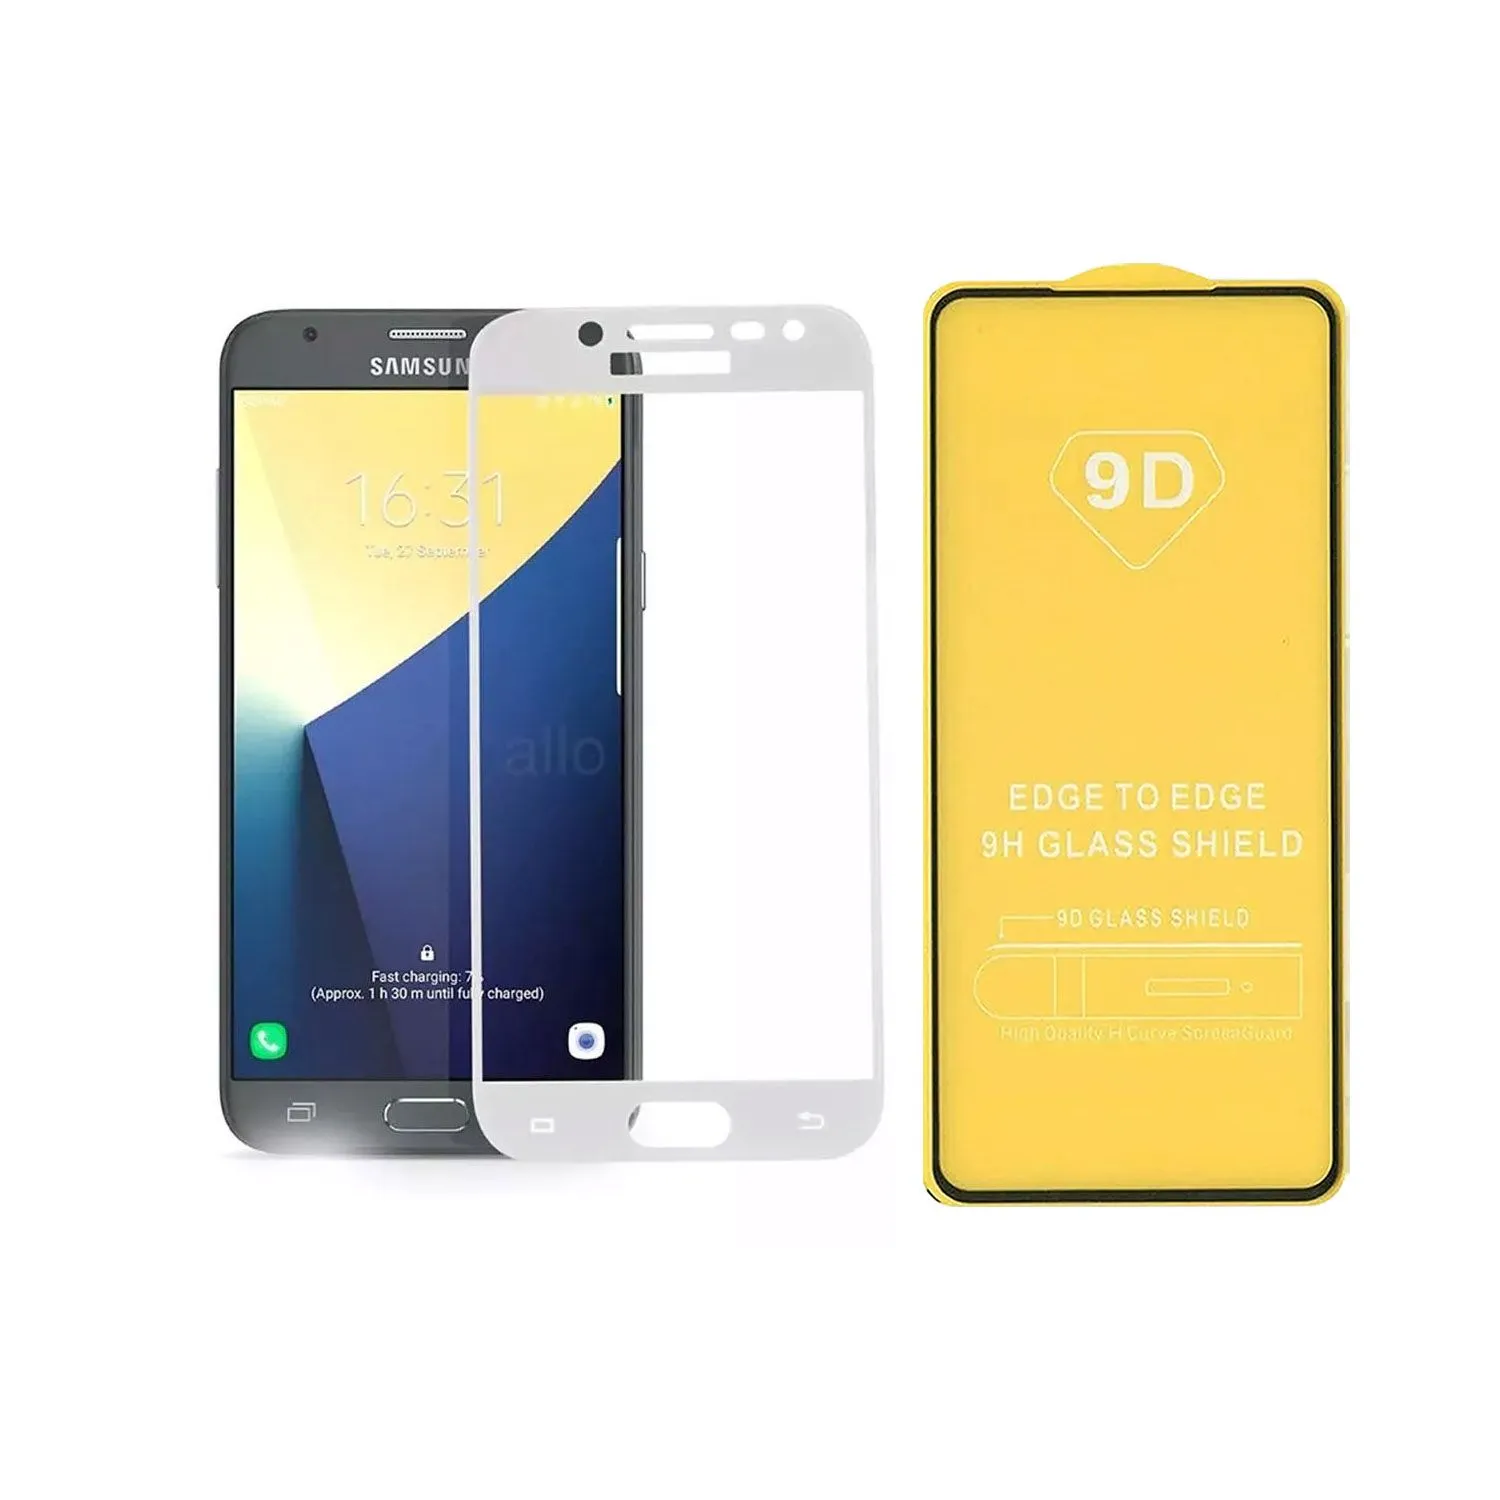 Противоударное стекло LEIWEI для дисплея Samsung Galaxy J5 2017 SM-J530F 9D тех.упаковка (белый)